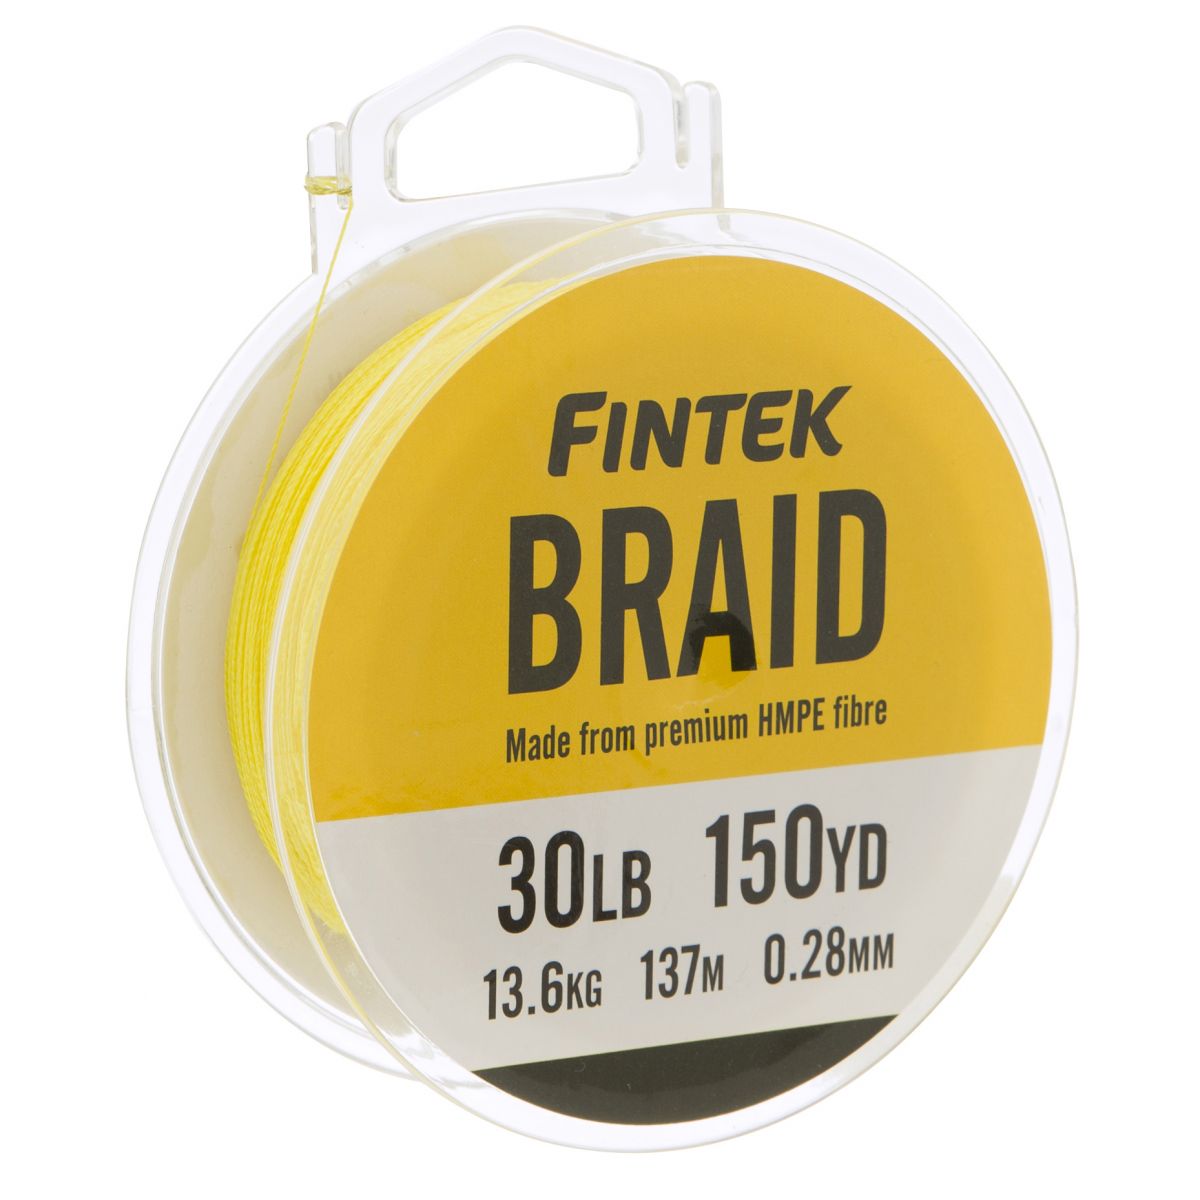 Fintek Braided Fishing Line - 150yd